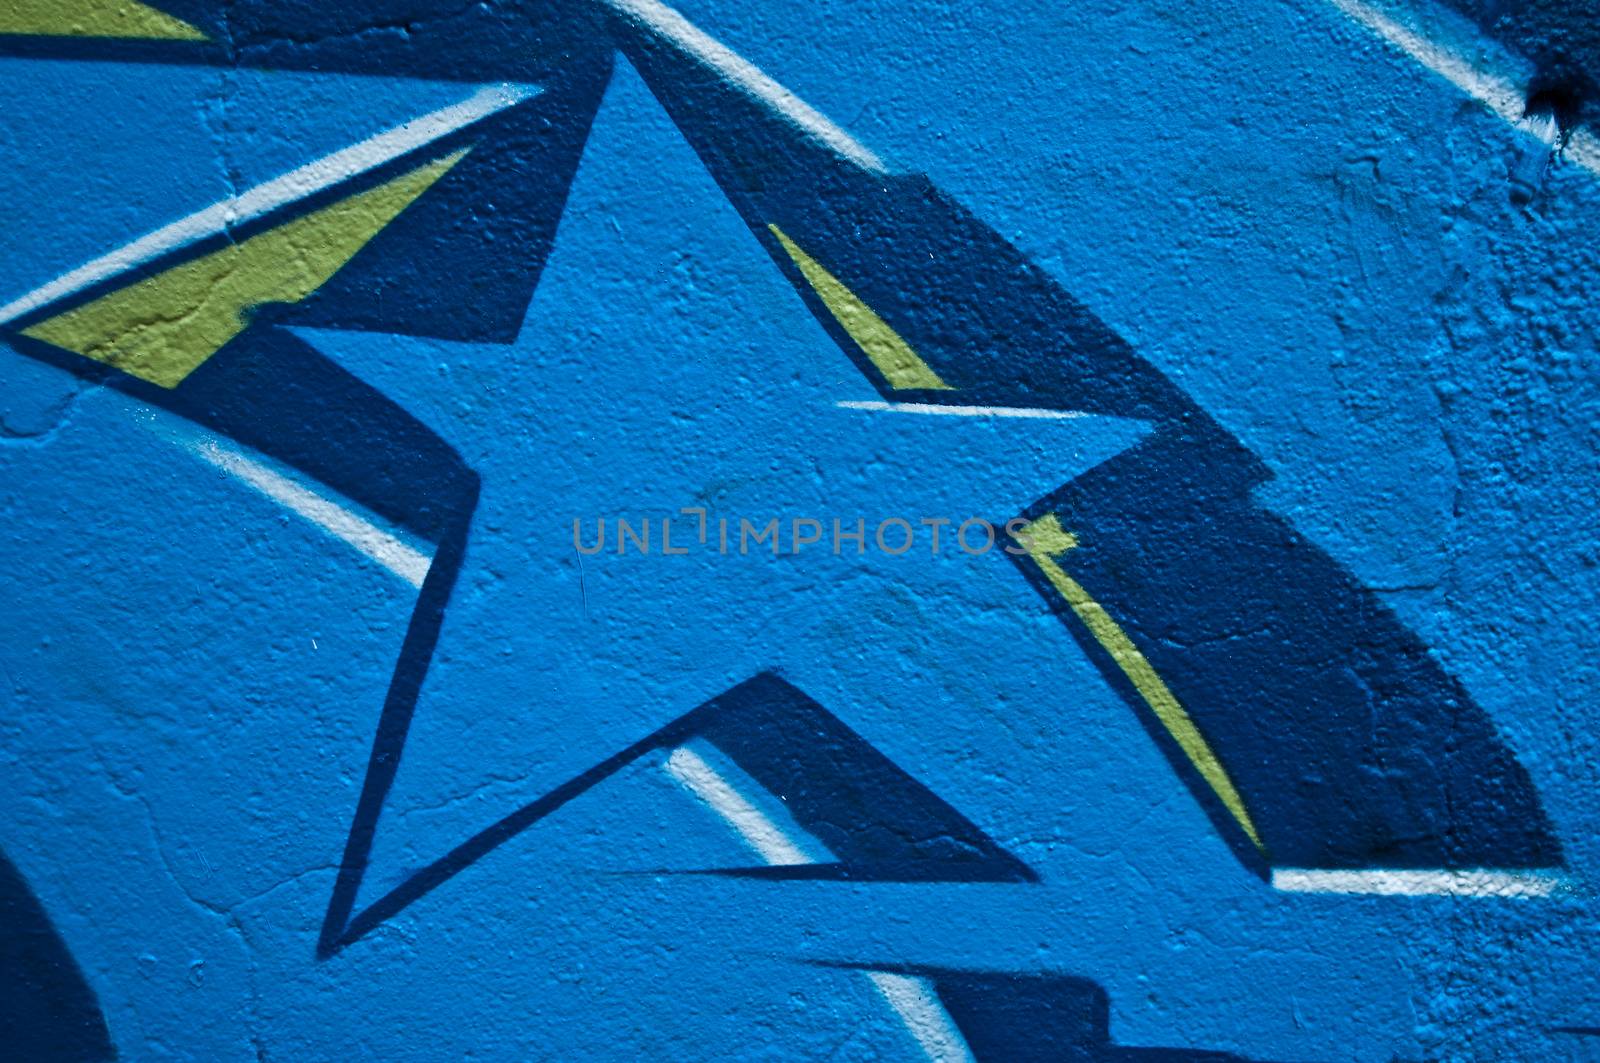 Mulhouse - France - 17 August 2014 - Urban Art - abstract blue star